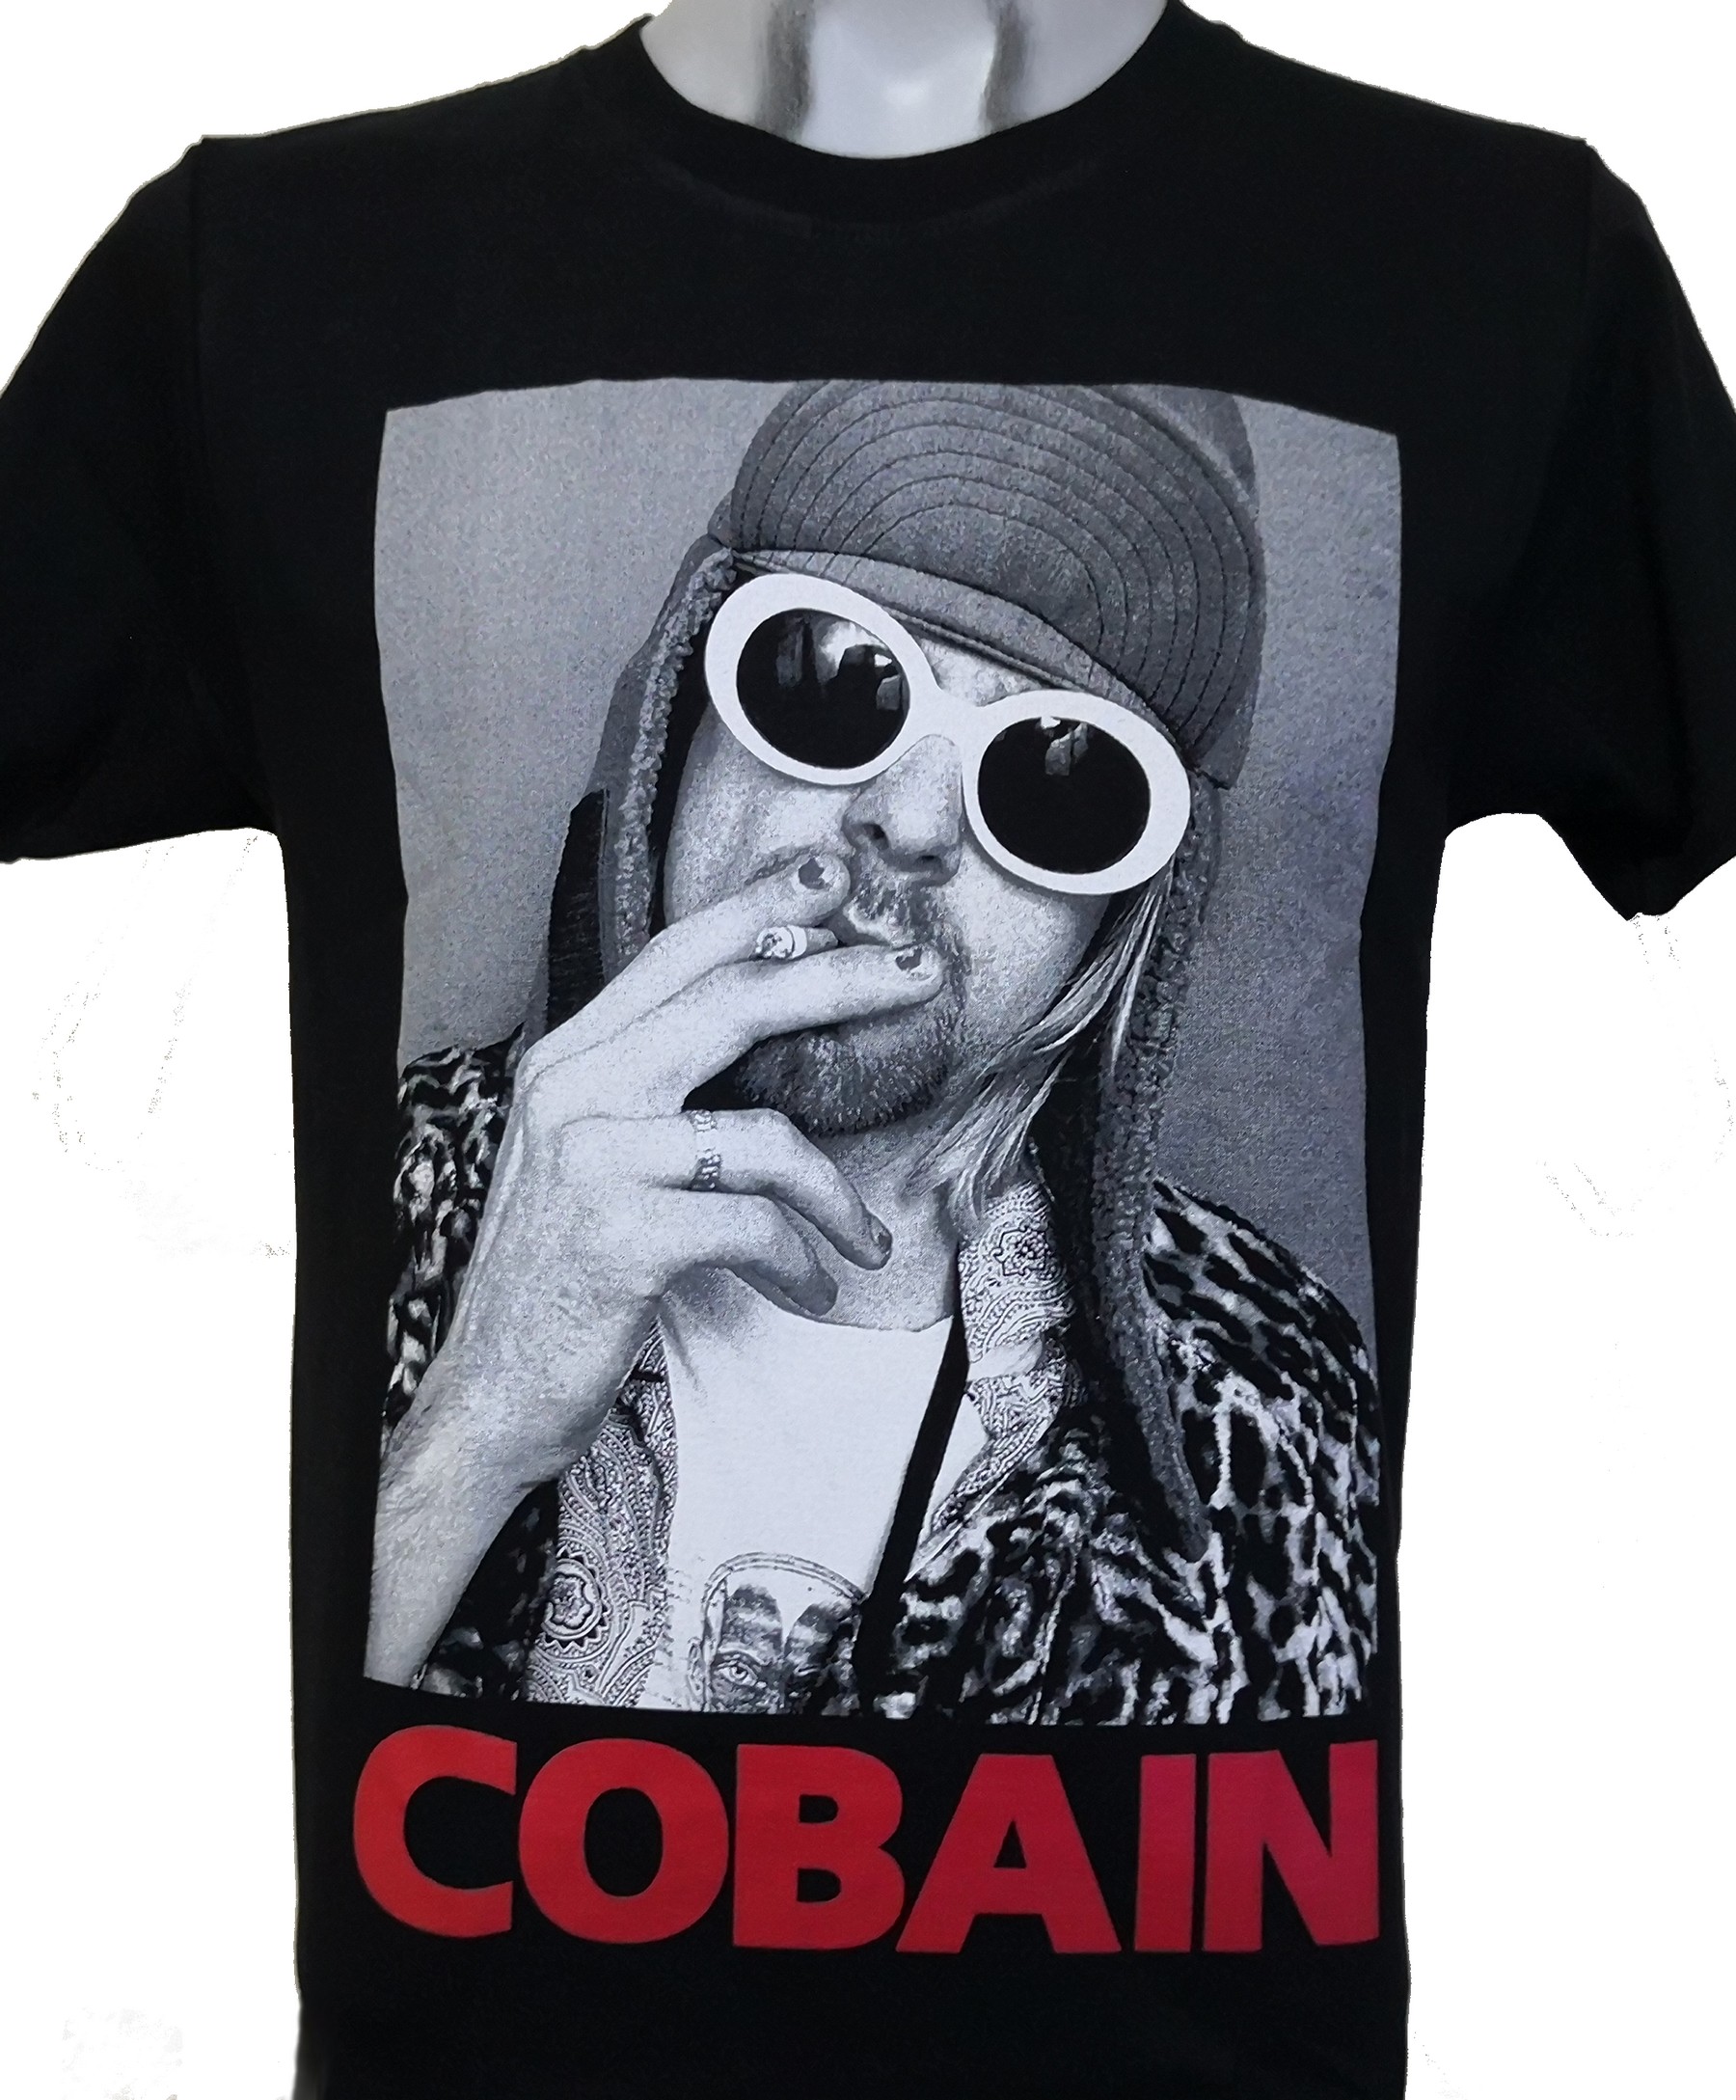 Cobain t-shirt size RoxxBKK